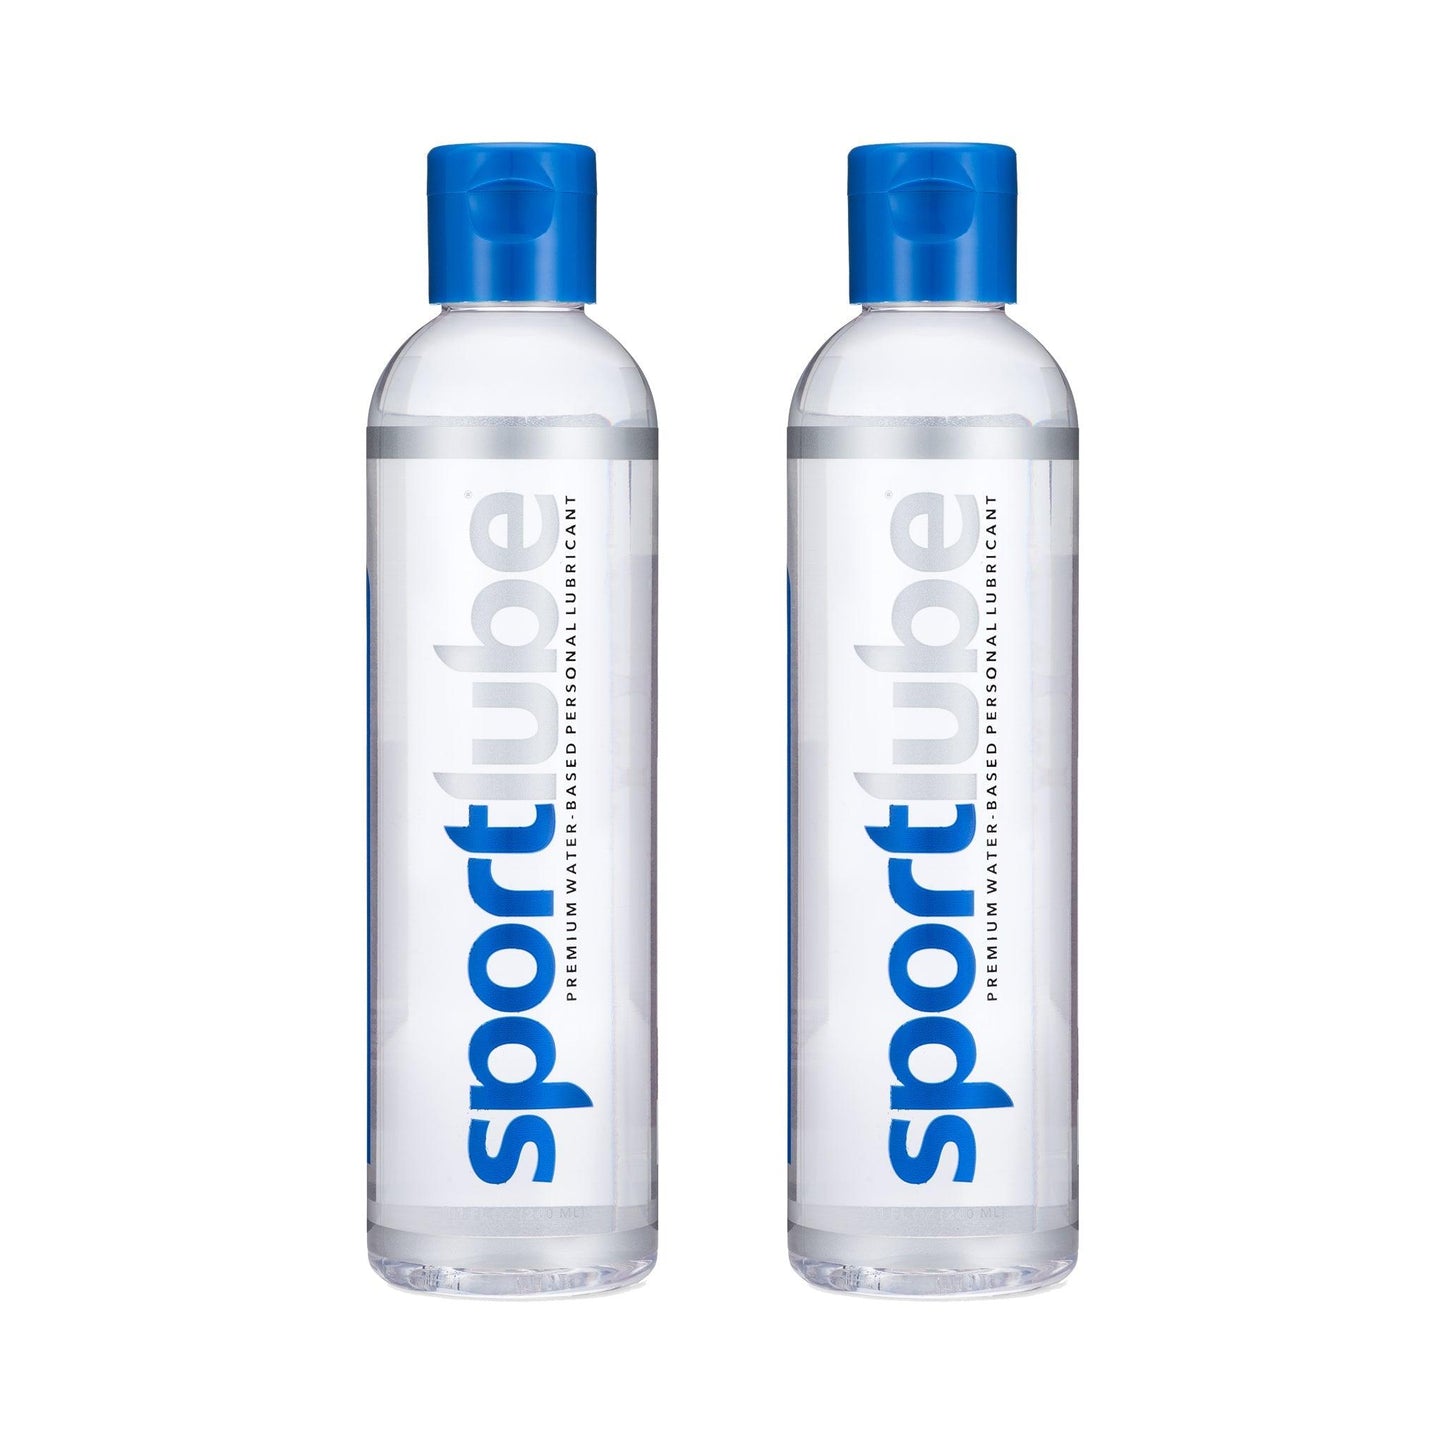 SportLube Premium Thicker Water-Based Personal Lubricant - sexlube.com